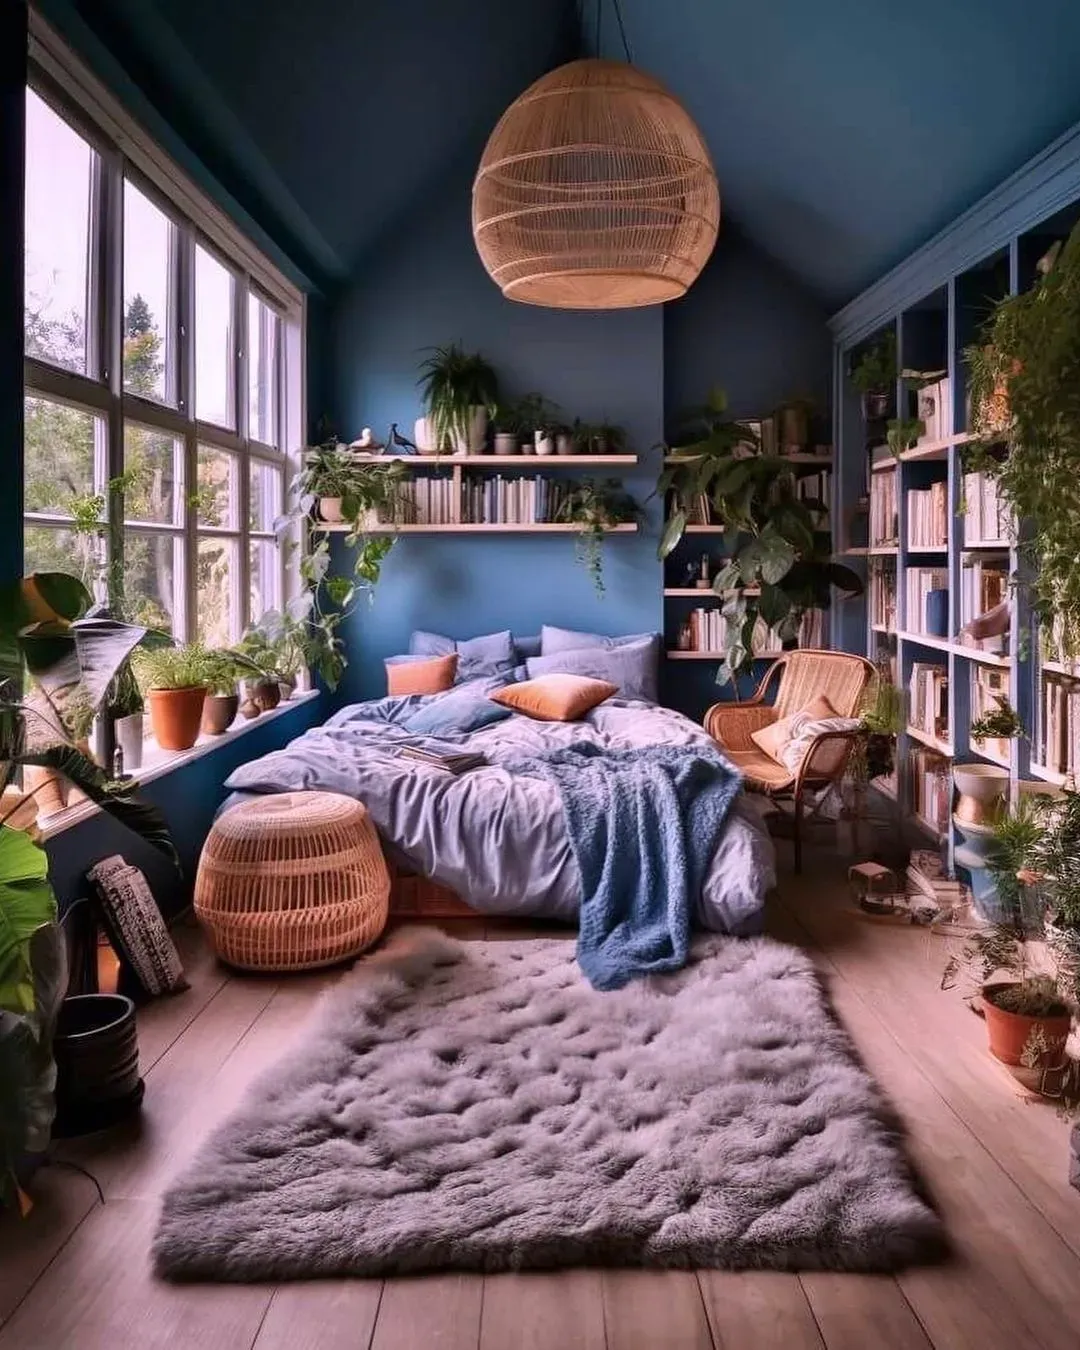 Benjamin Moore Blue Nova bedroom color